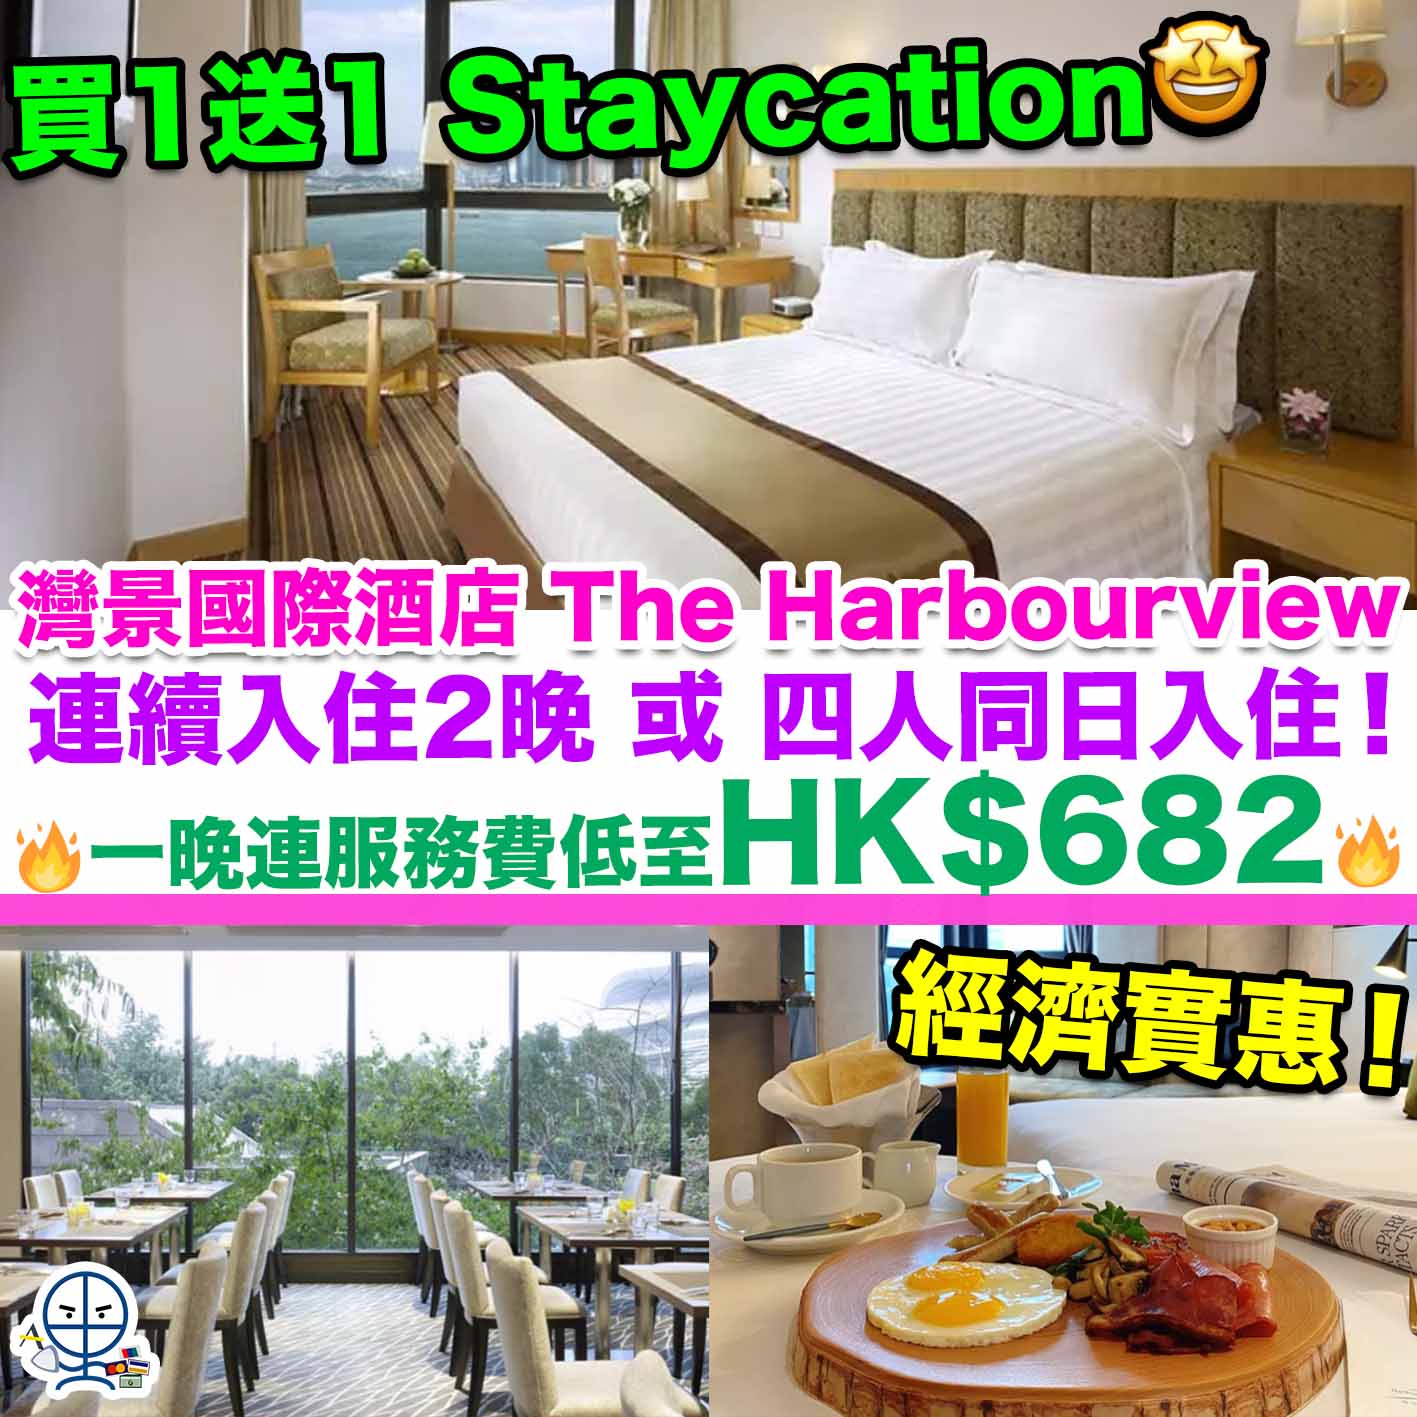 灣景國際酒店 The Harbourview-staycation-hong kong hotel staycation-酒店優惠-本地旅遊